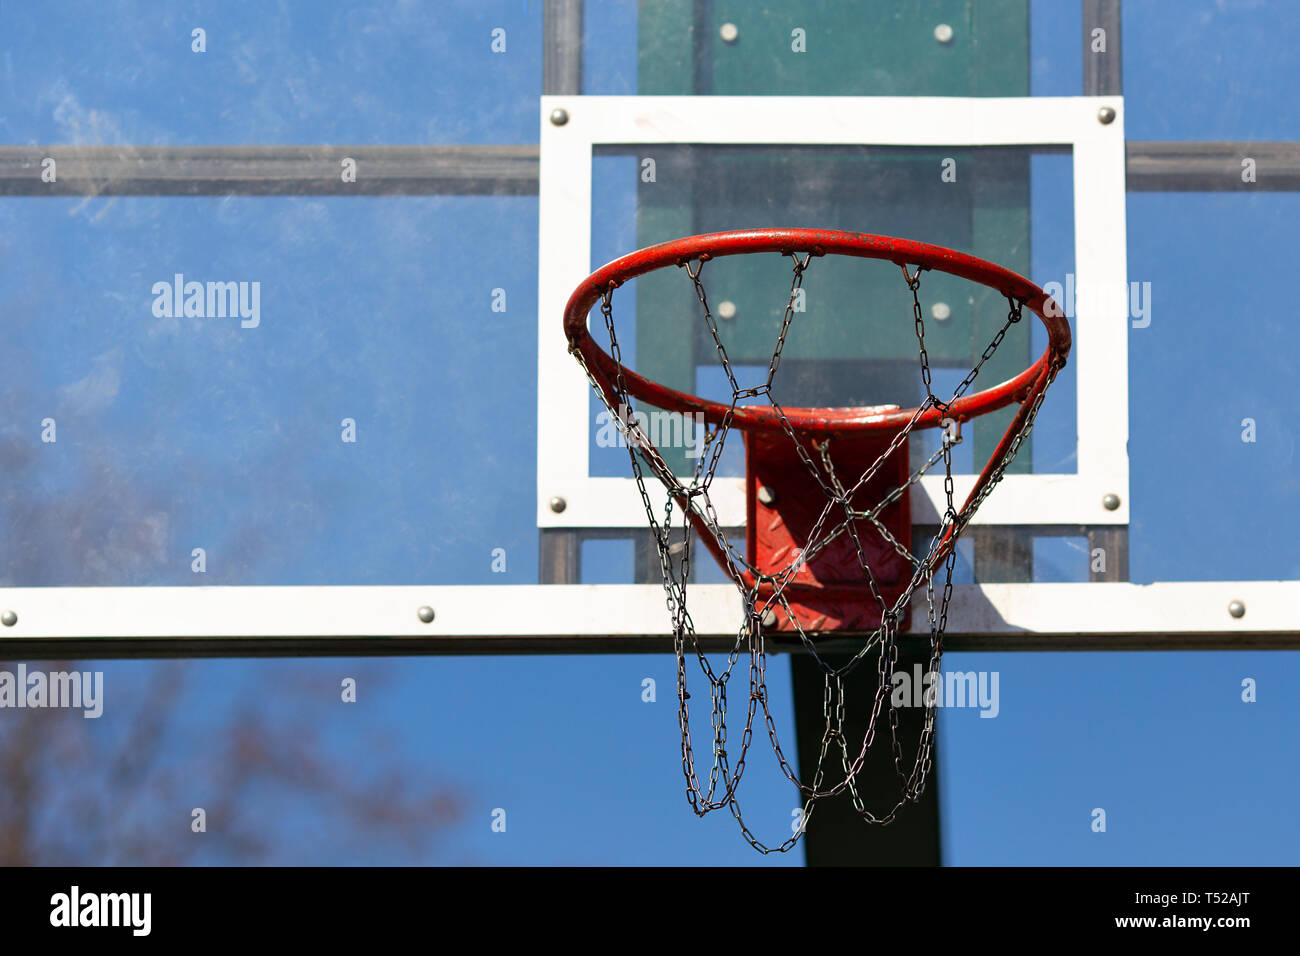 Basketballkorb outdoor Stockfoto